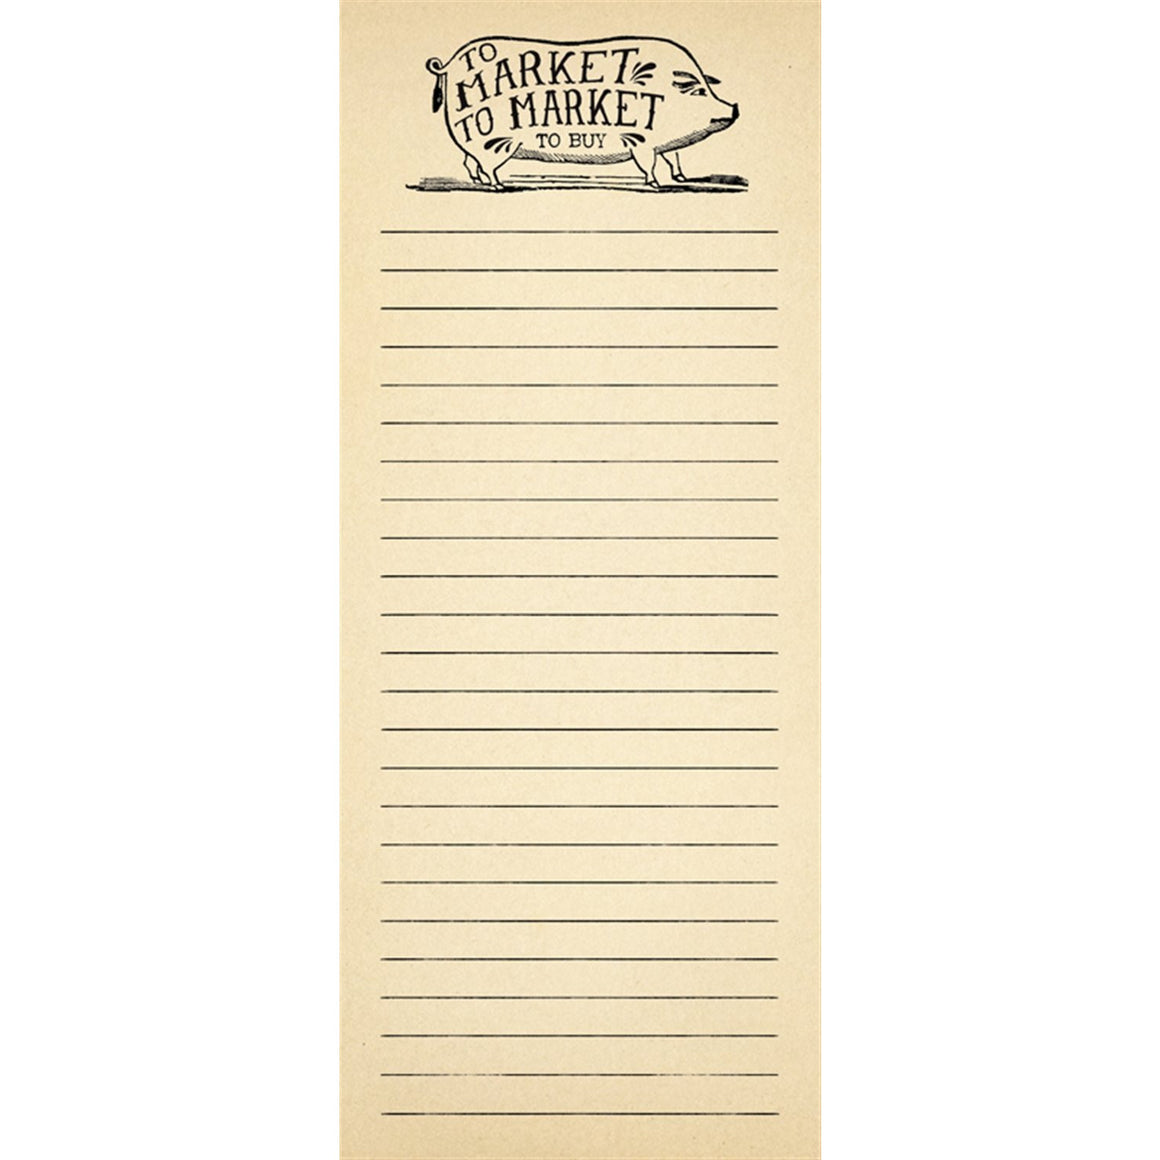 Skinny Notepad | To Market